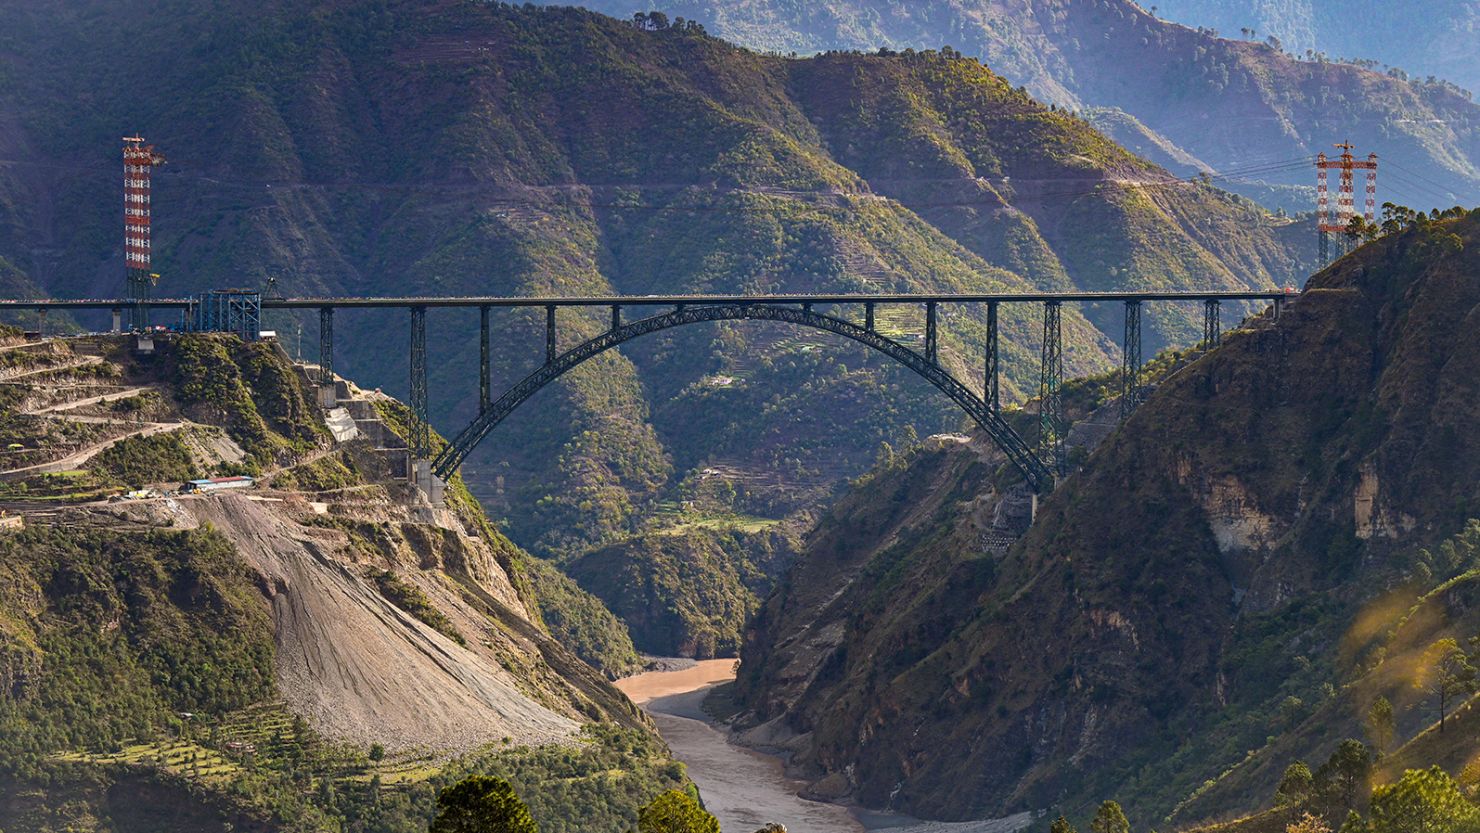 Taller than the Eiffel Tower, India constructs world's highest railway  bridge in Kashmir | CNN